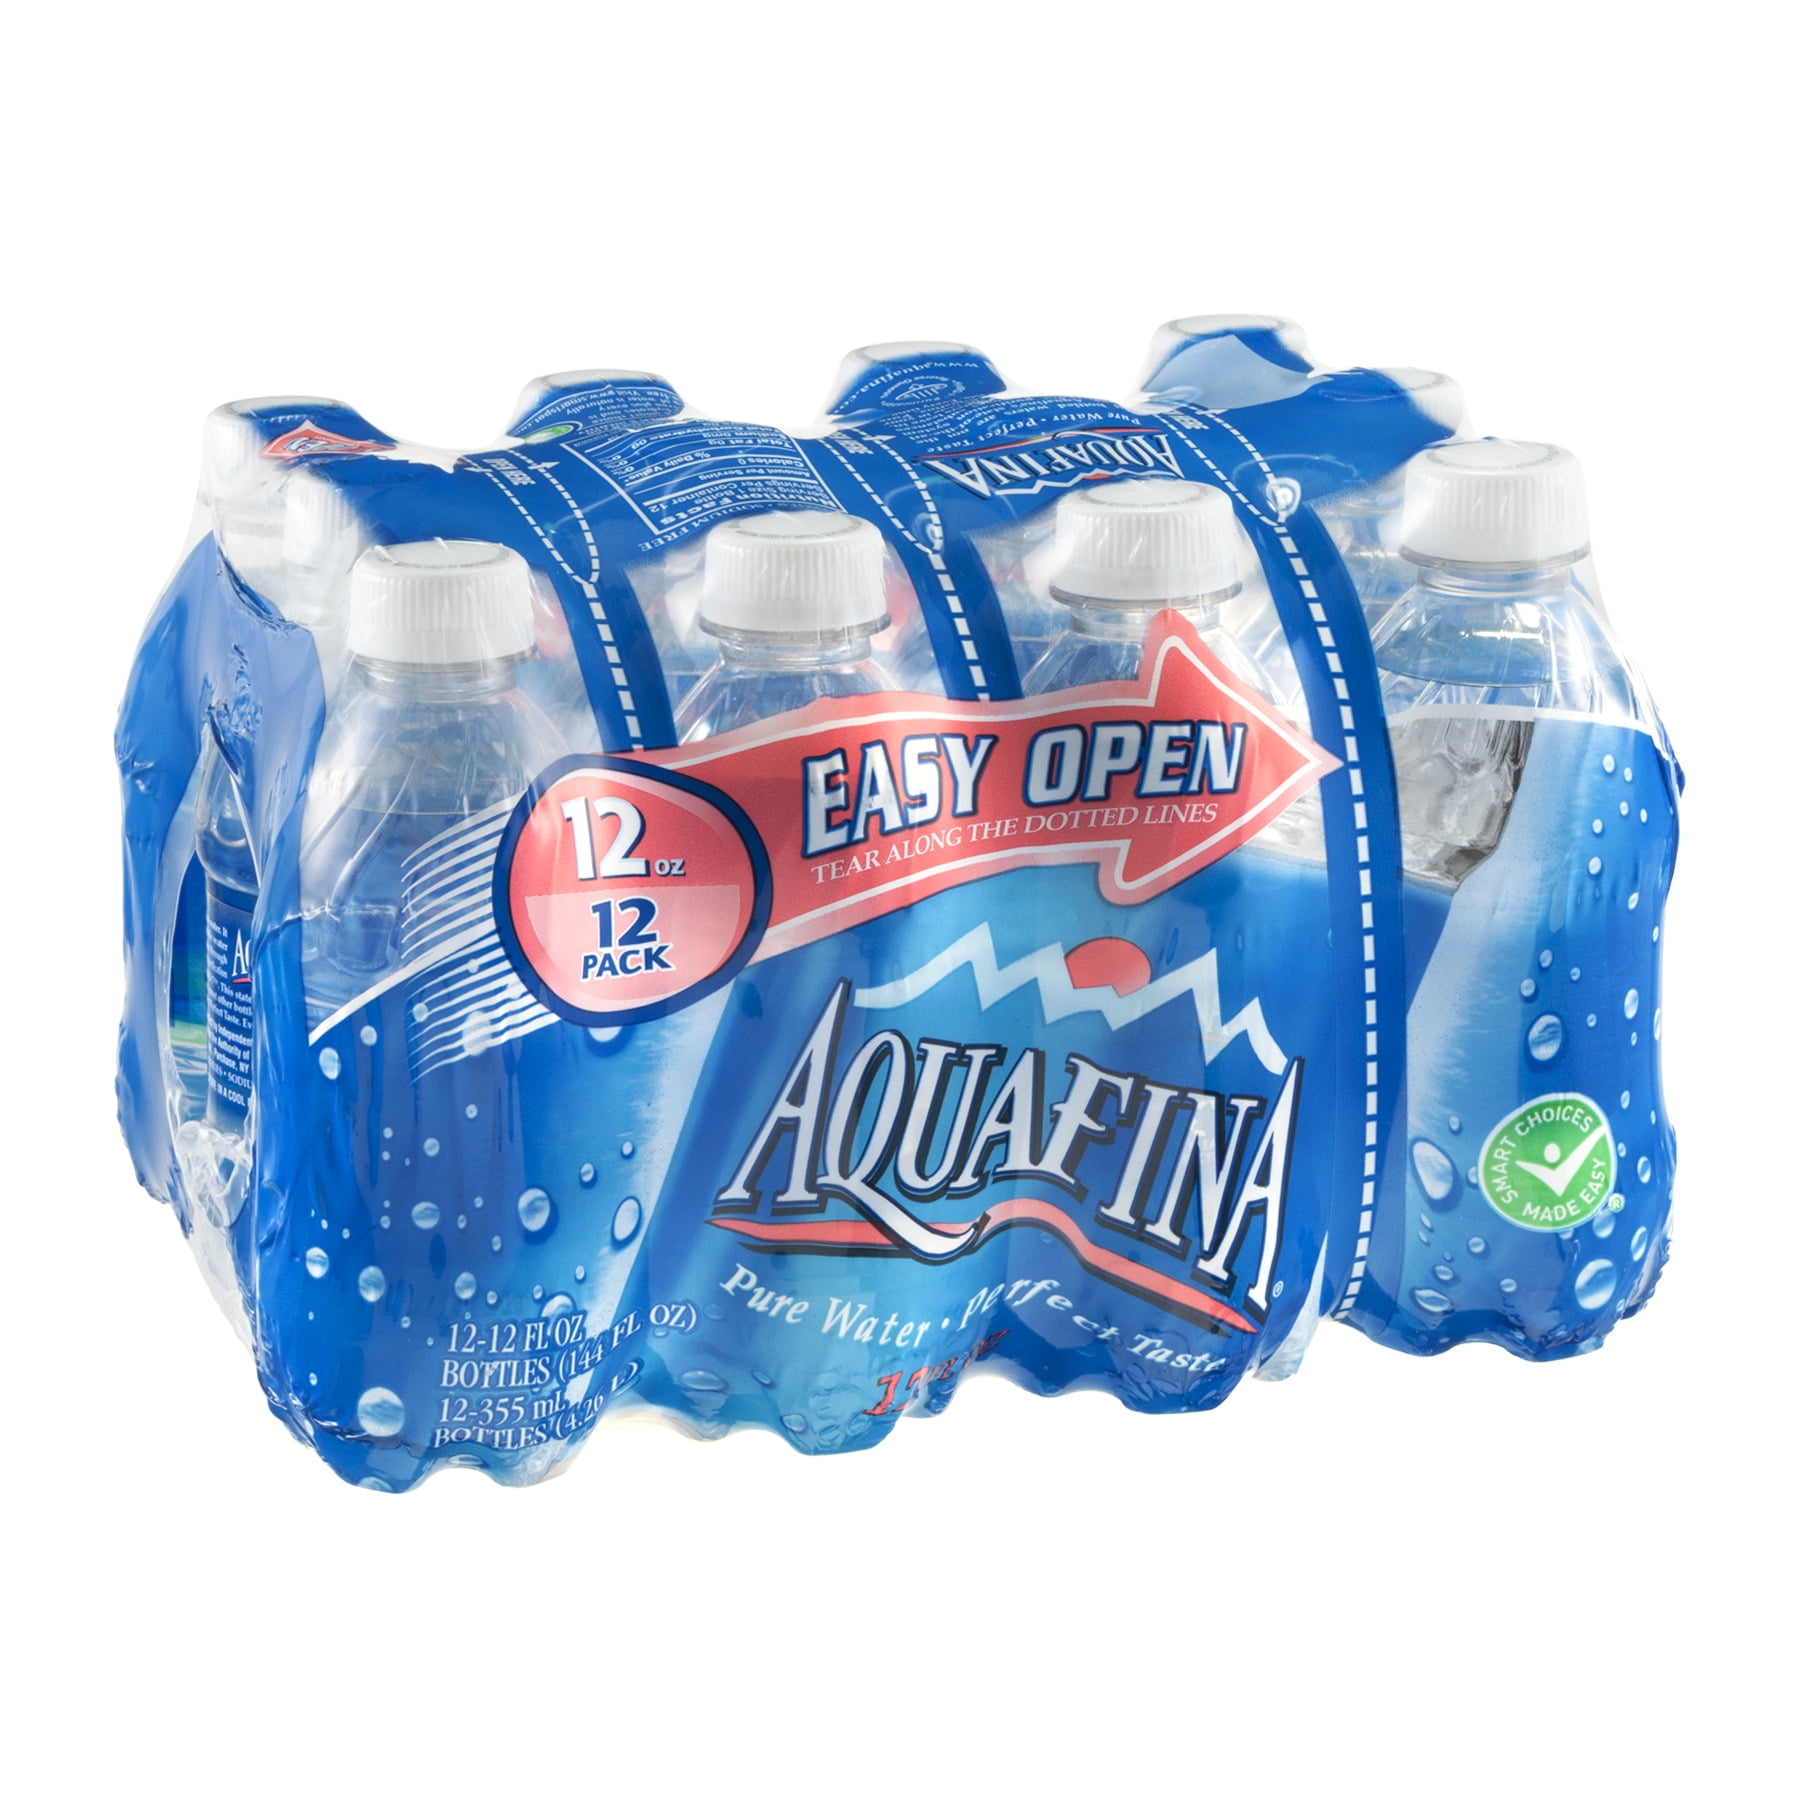 12 Pack (16.9 FL. OZ.) Wc Water Bottles